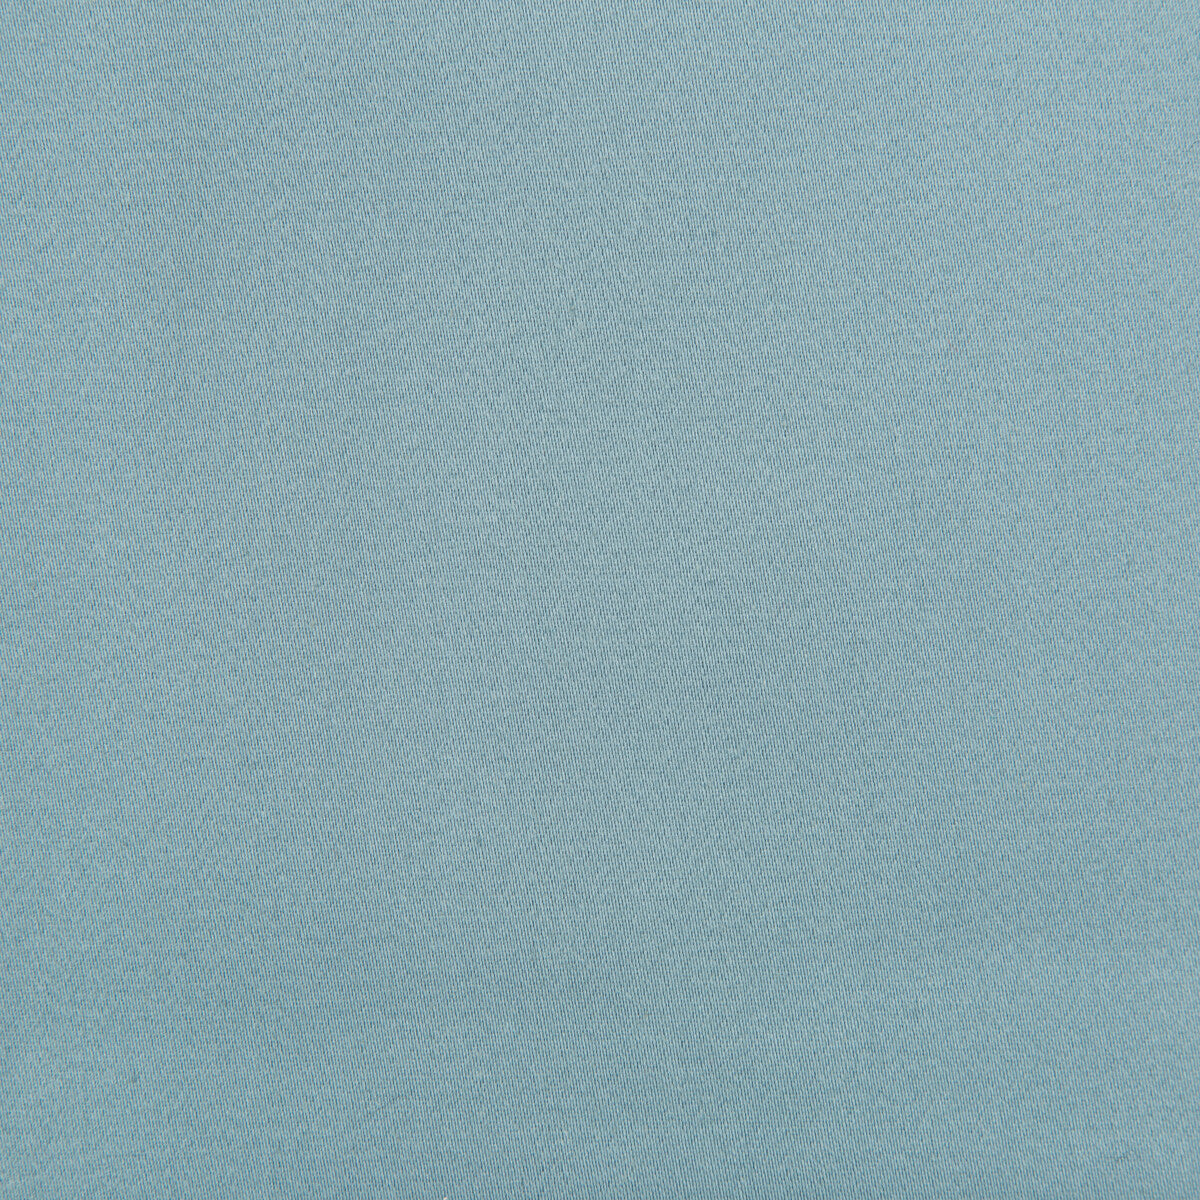 Manzanares fabric in azul color - pattern LCT5480.004.0 - by Gaston y Daniela in the Lorenzo Castillo IV collection